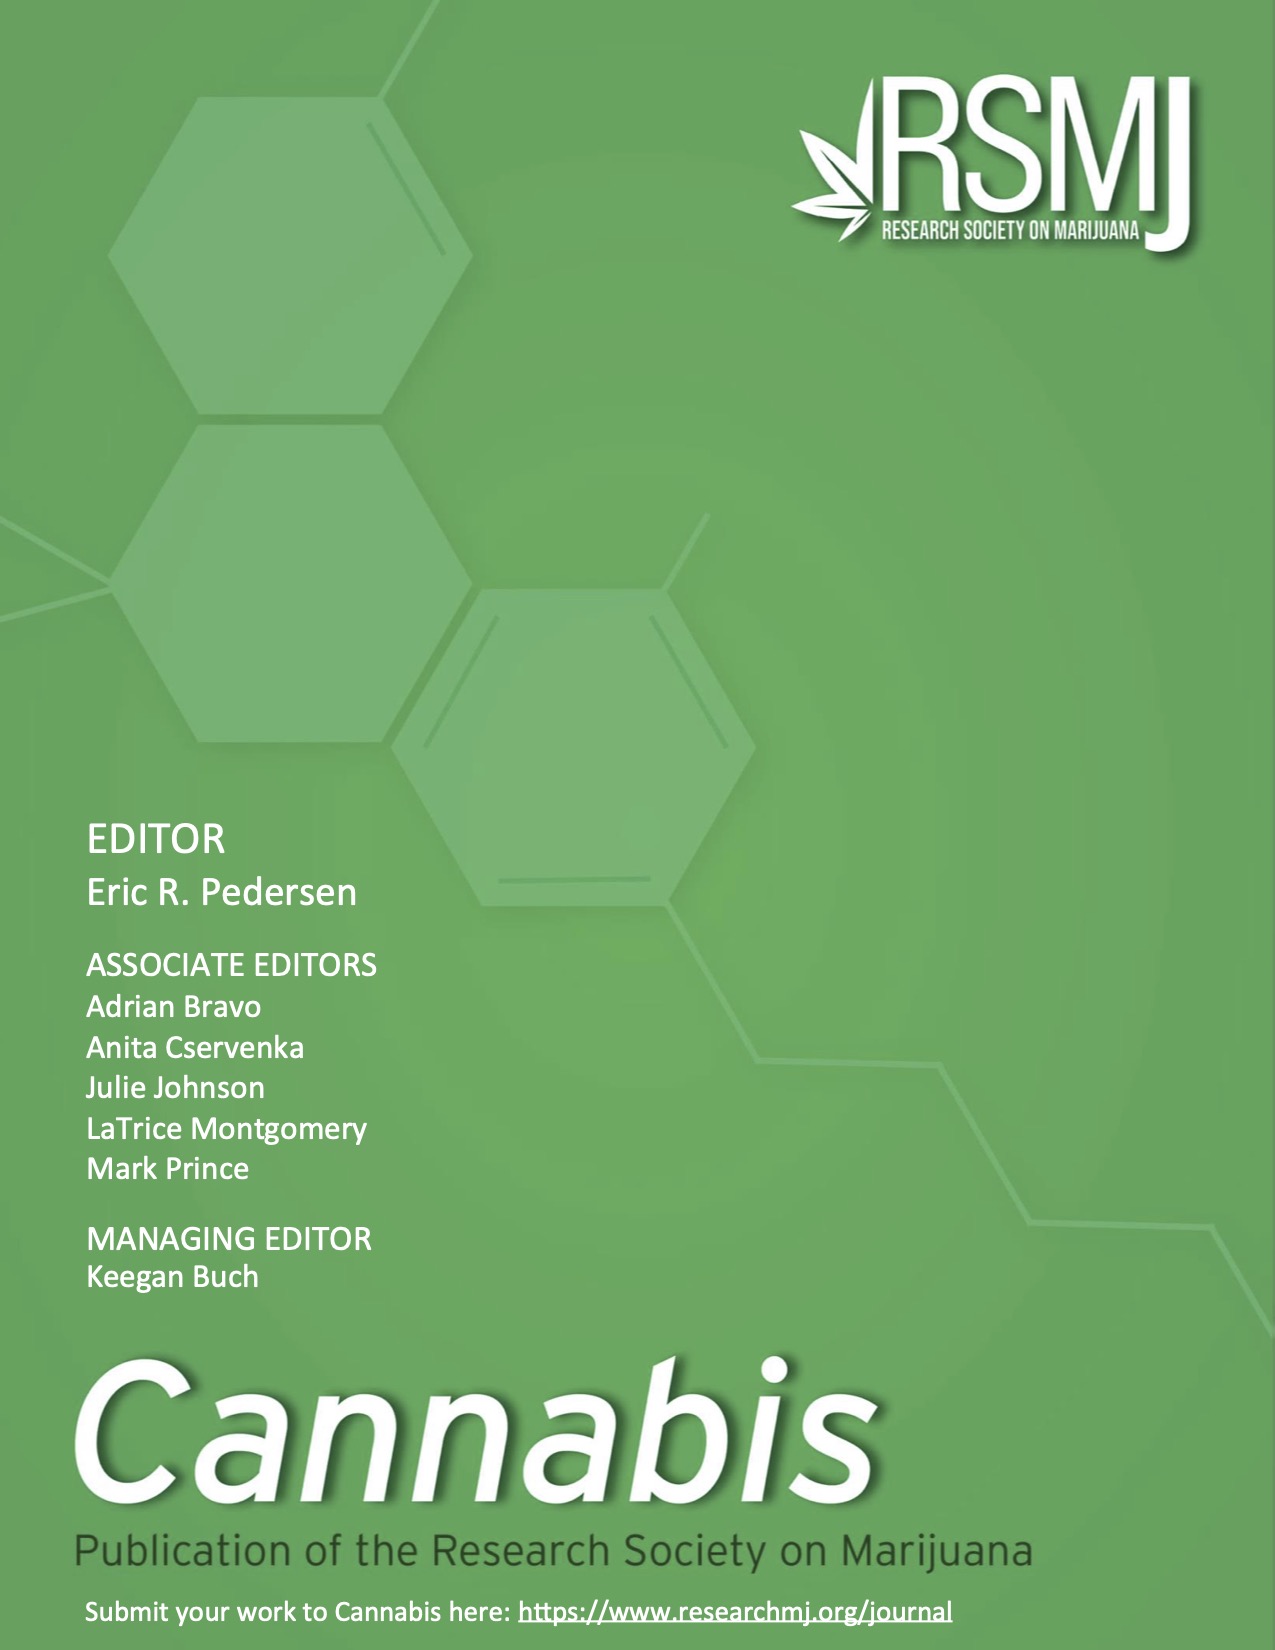 Cannabis - Publication of the Research Society on Marijuana